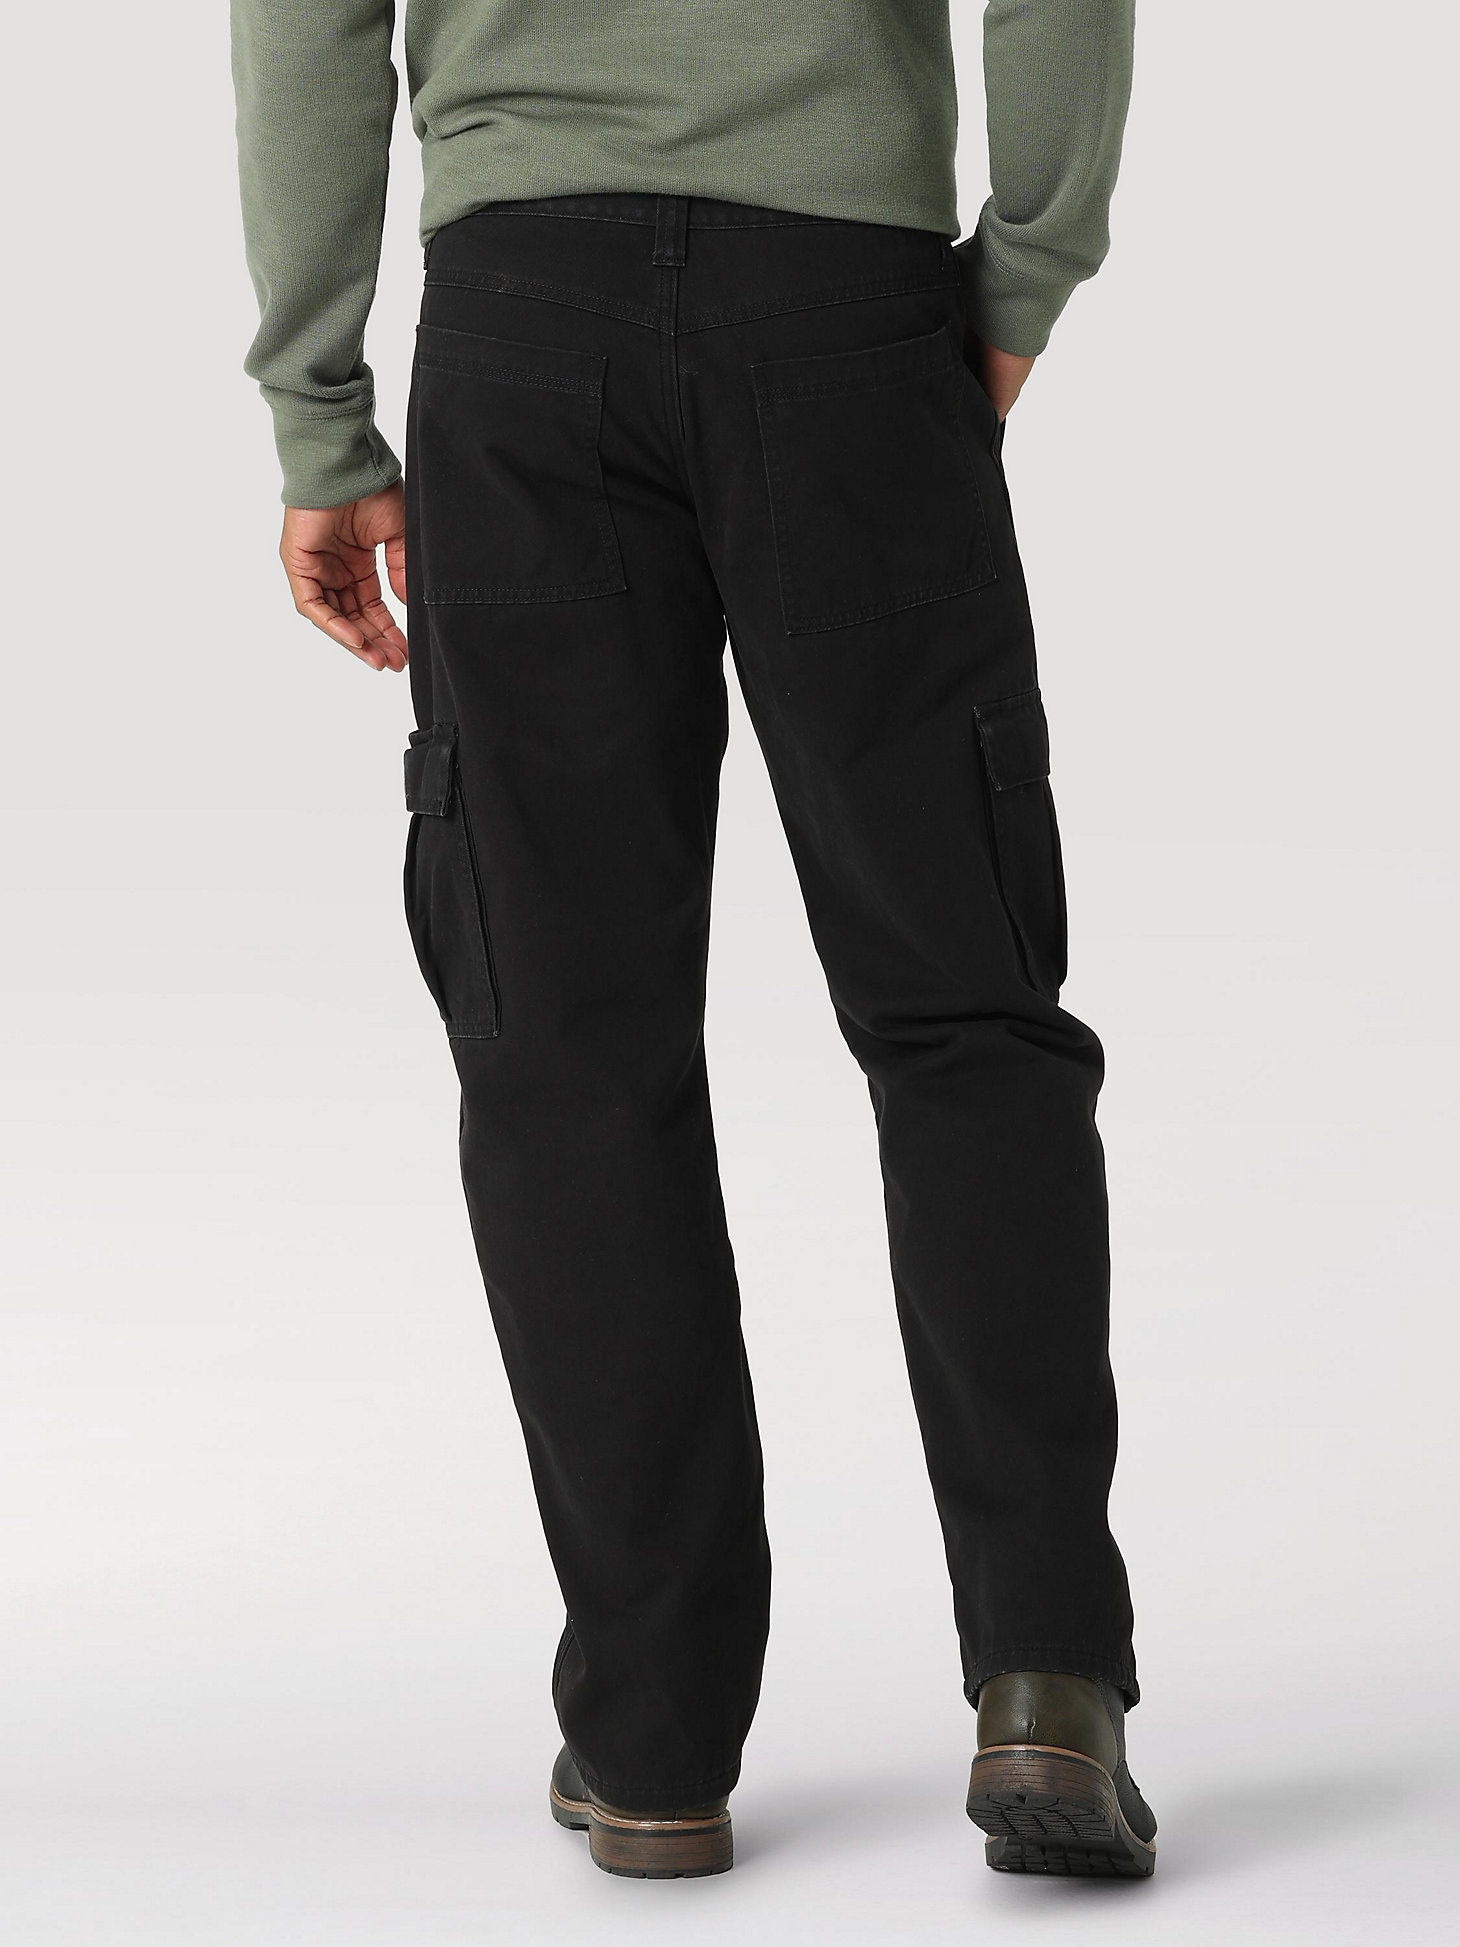 Men's Fleece Lined Cargo Pant in Black alternative view 2